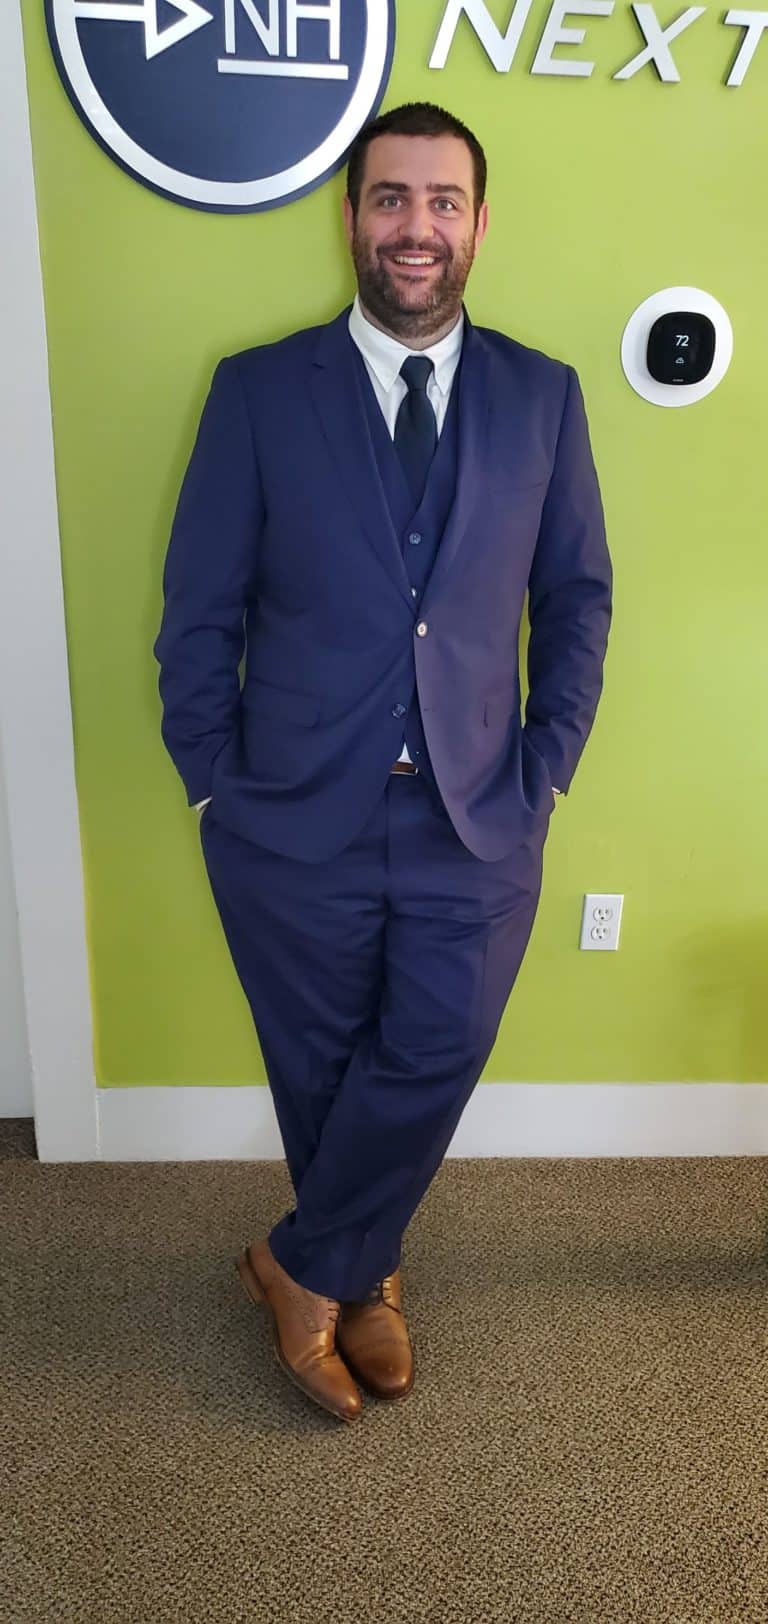 Daniel Falco headshot, Digital marketing Strategist for TheeDigital in a 3 blue 3 piece suit